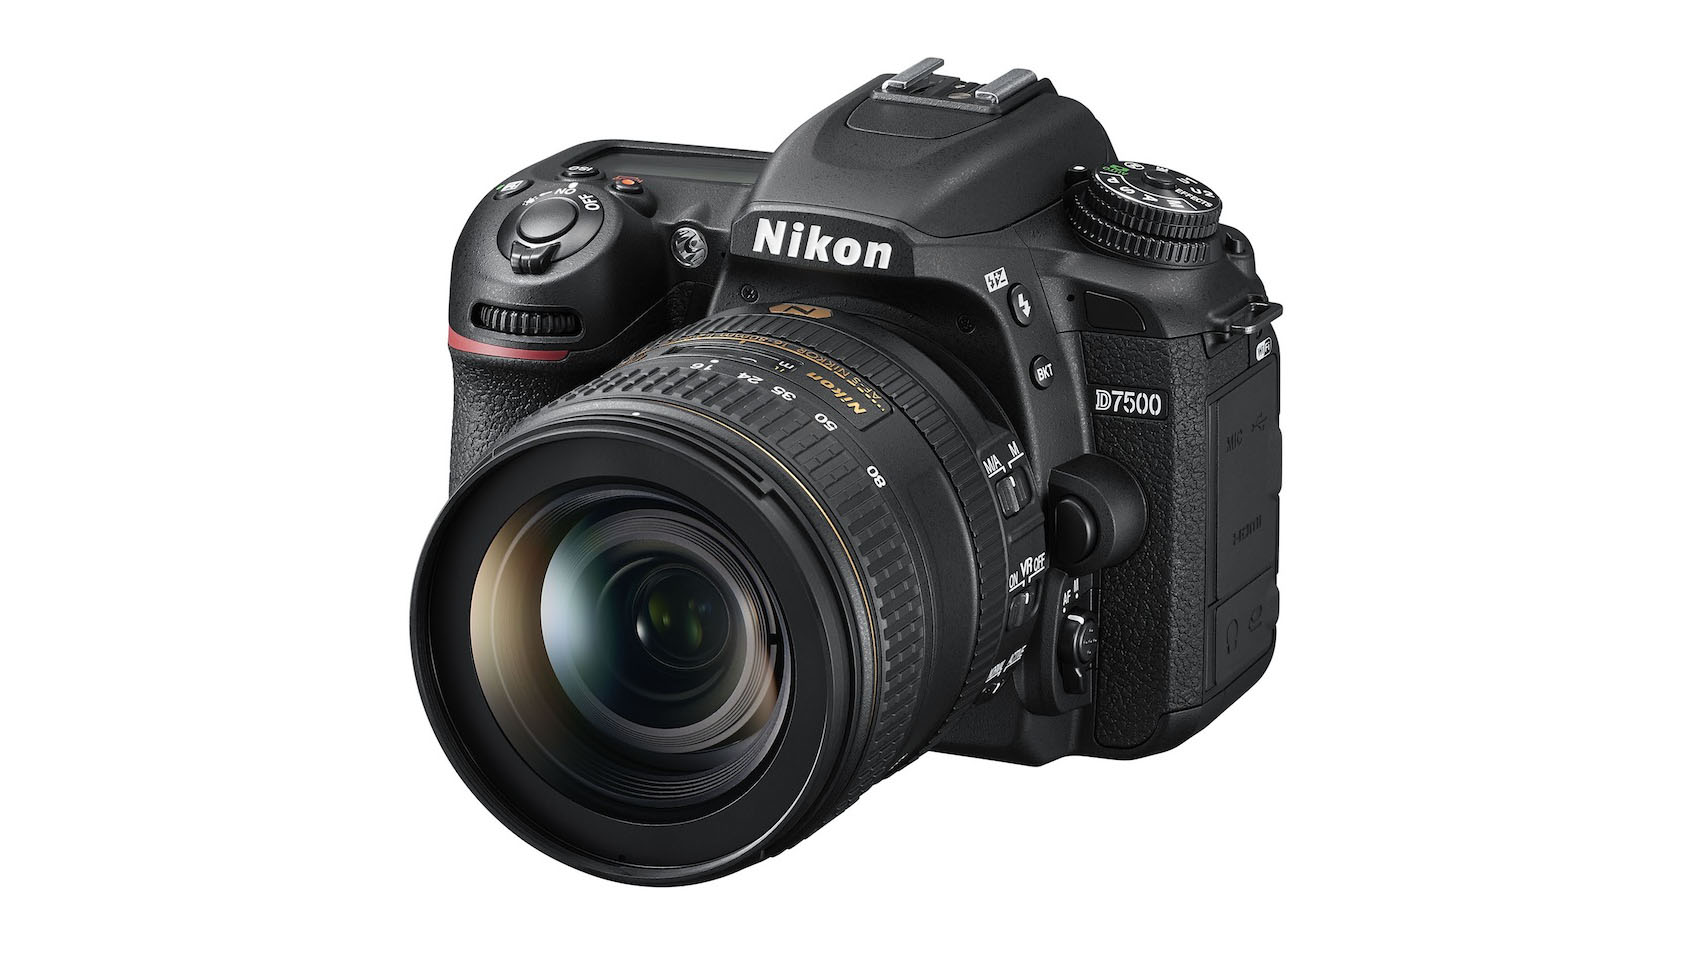 Best Nikon camera: Nikon D7500